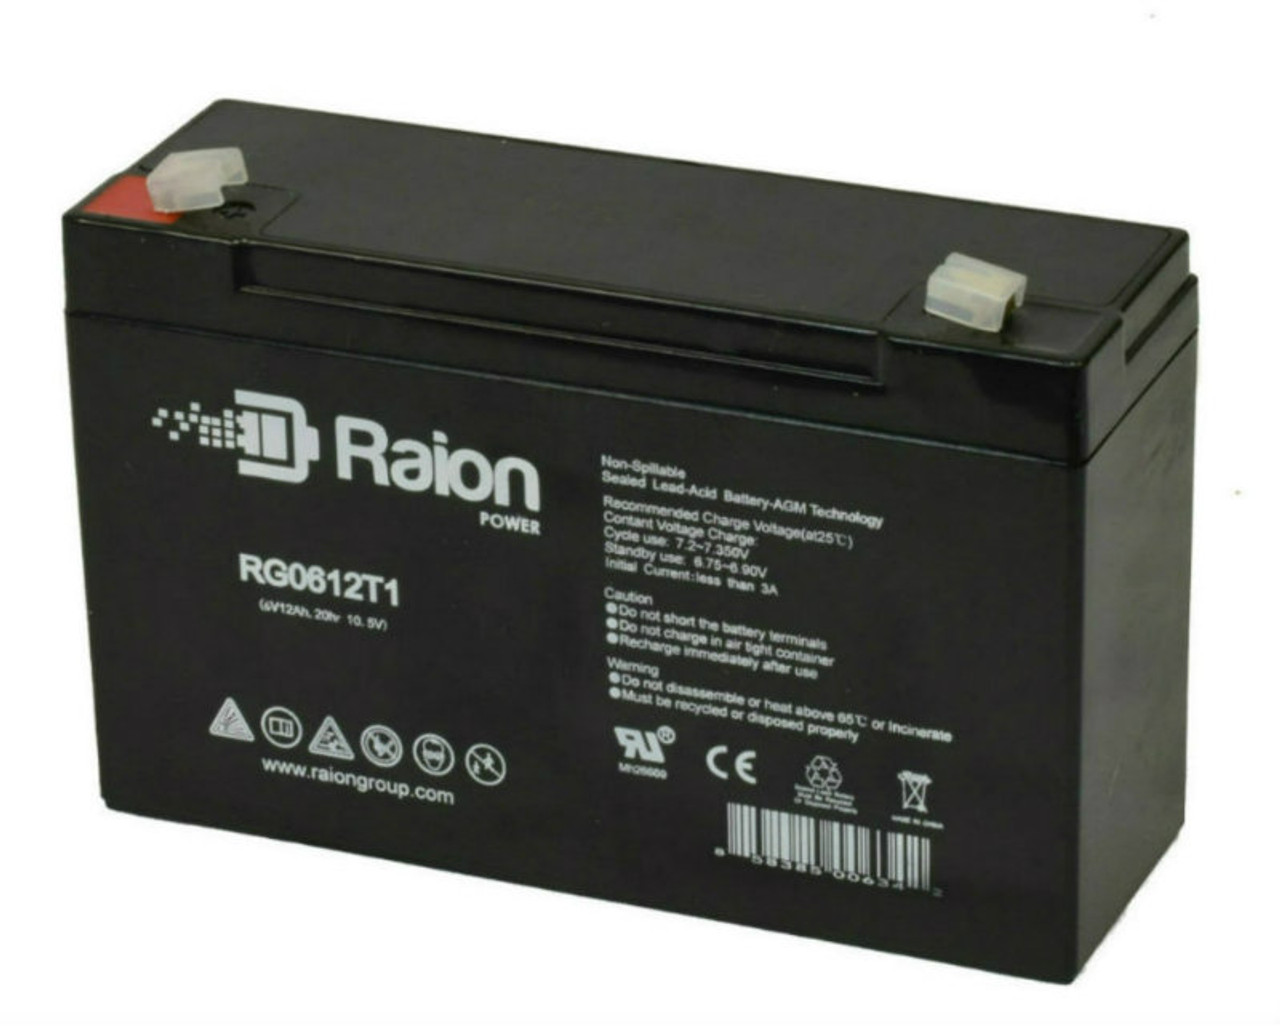 Raion Power RG06120T1 Replacement Emergency Light Battery for Light 2RPG3